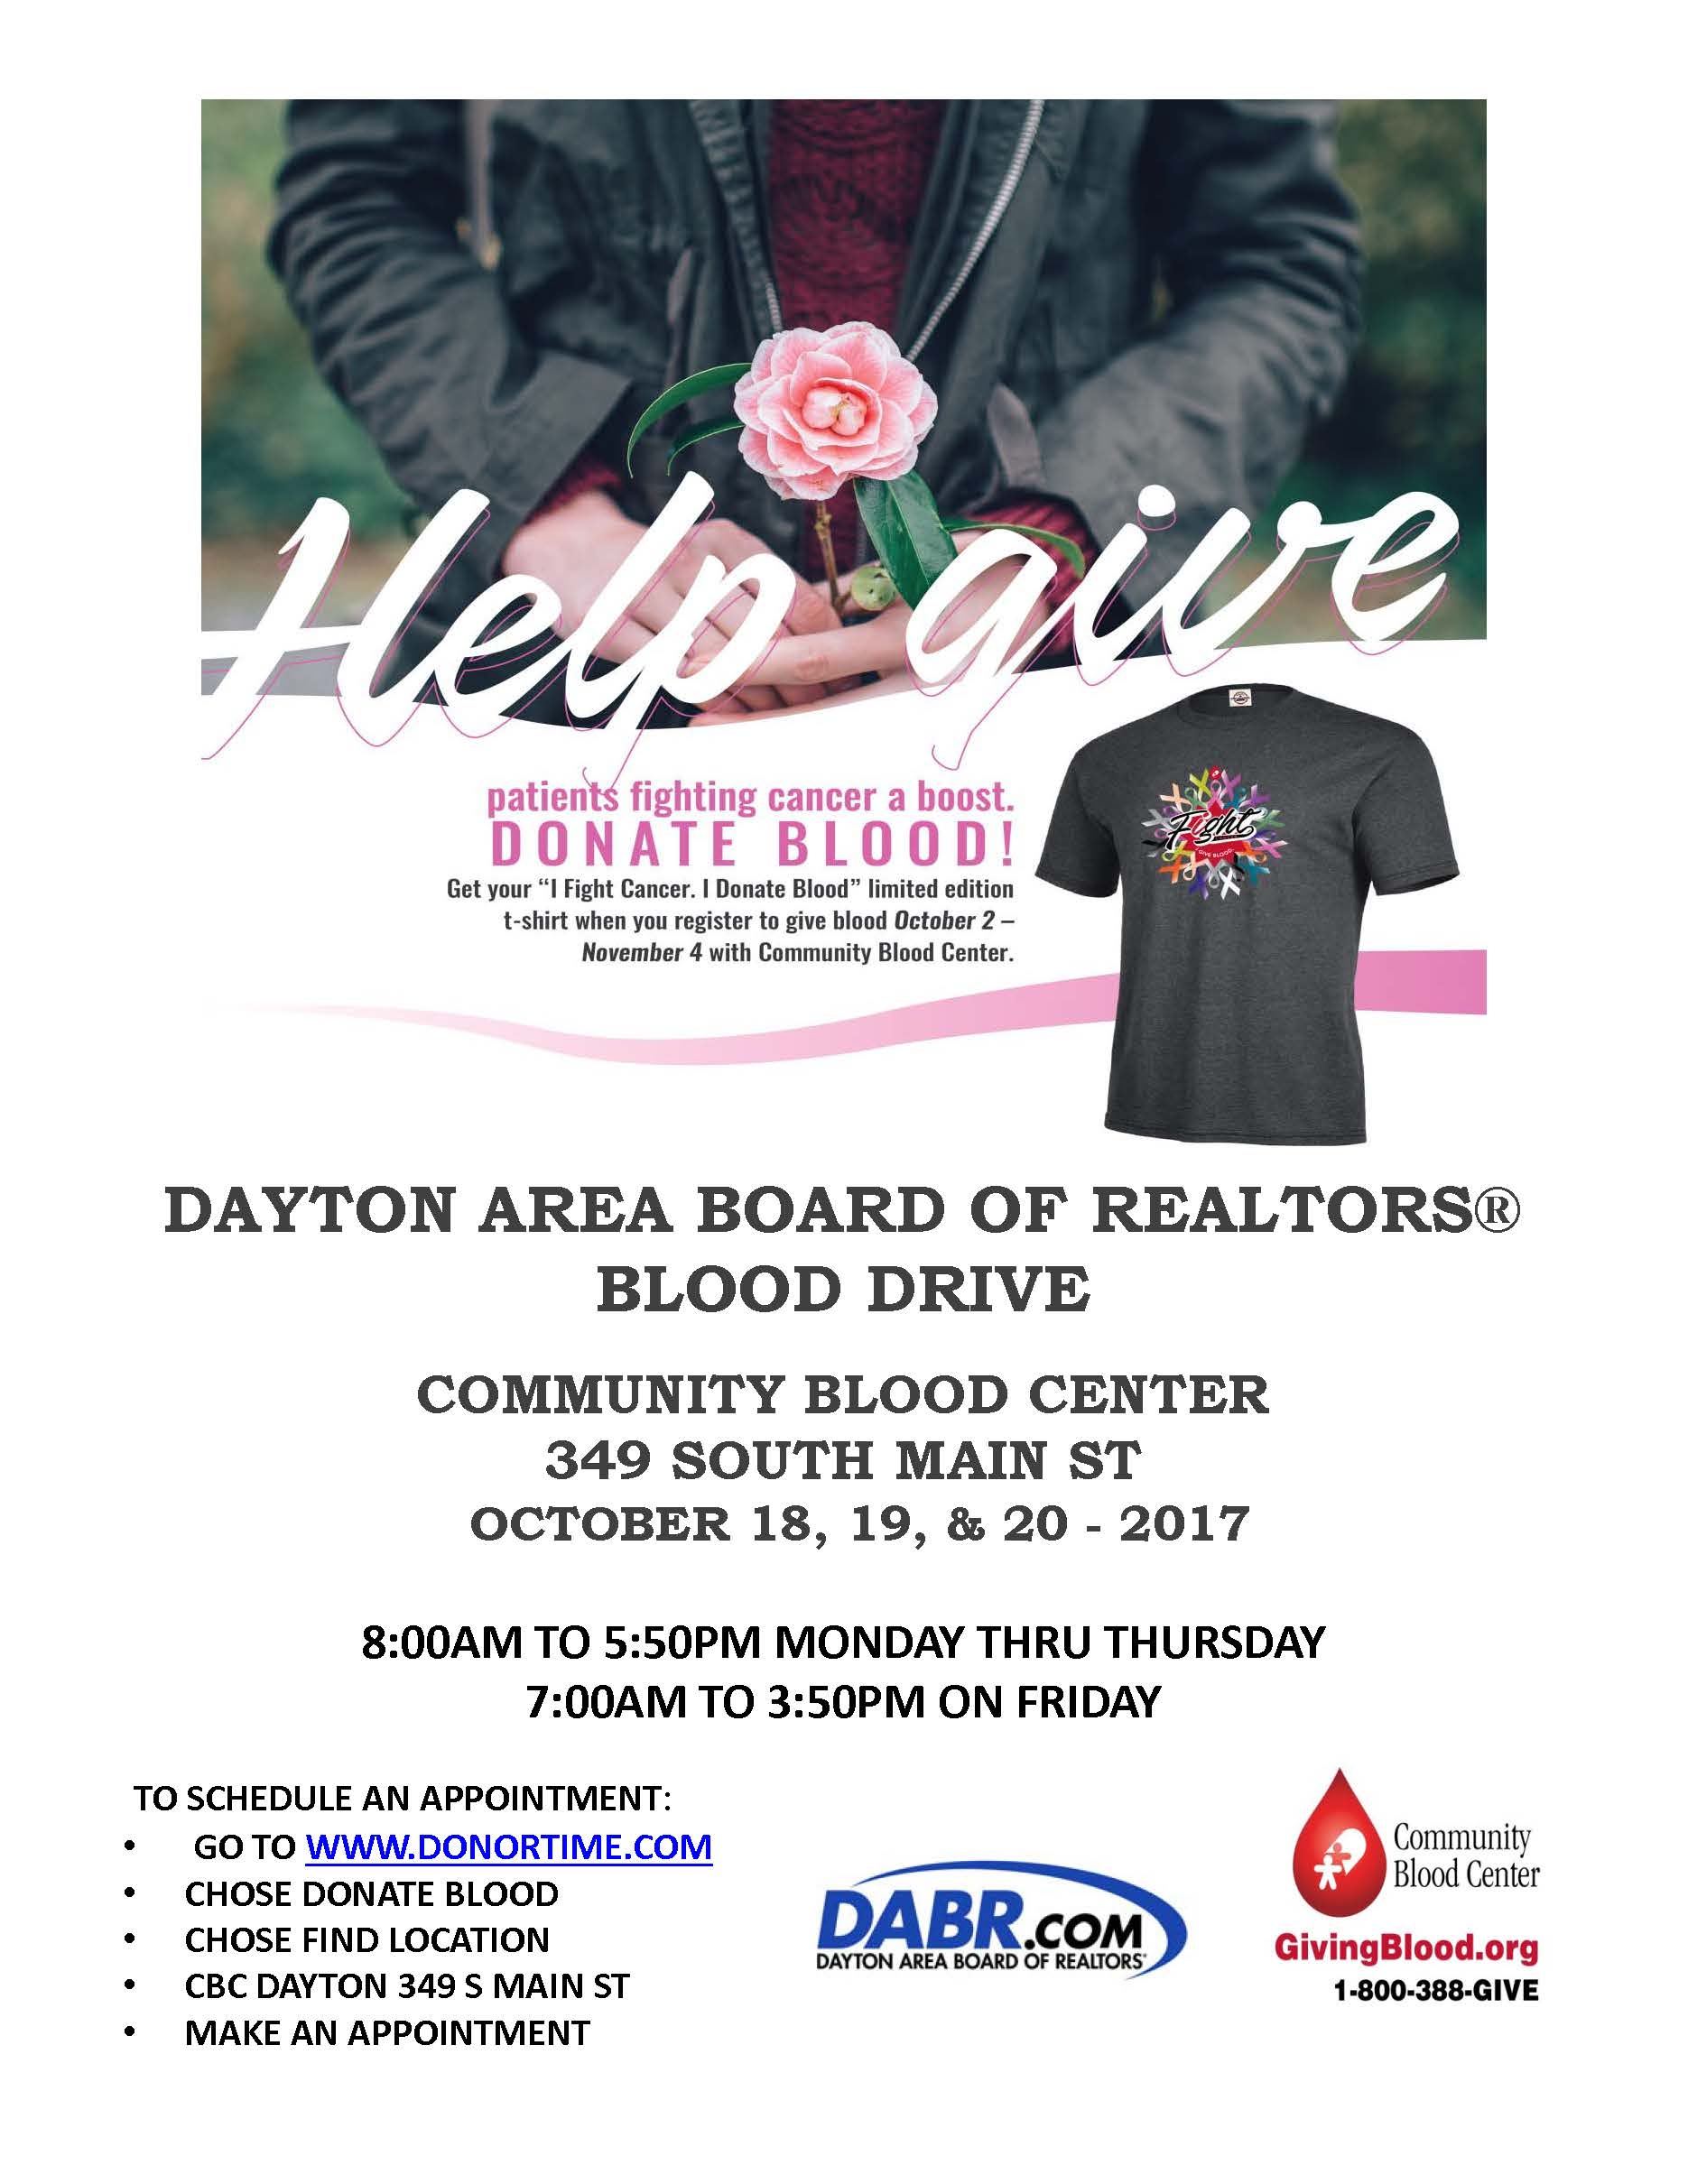 DABR Blood Drive October 18, 19, & 20 Dayton REALTORS®